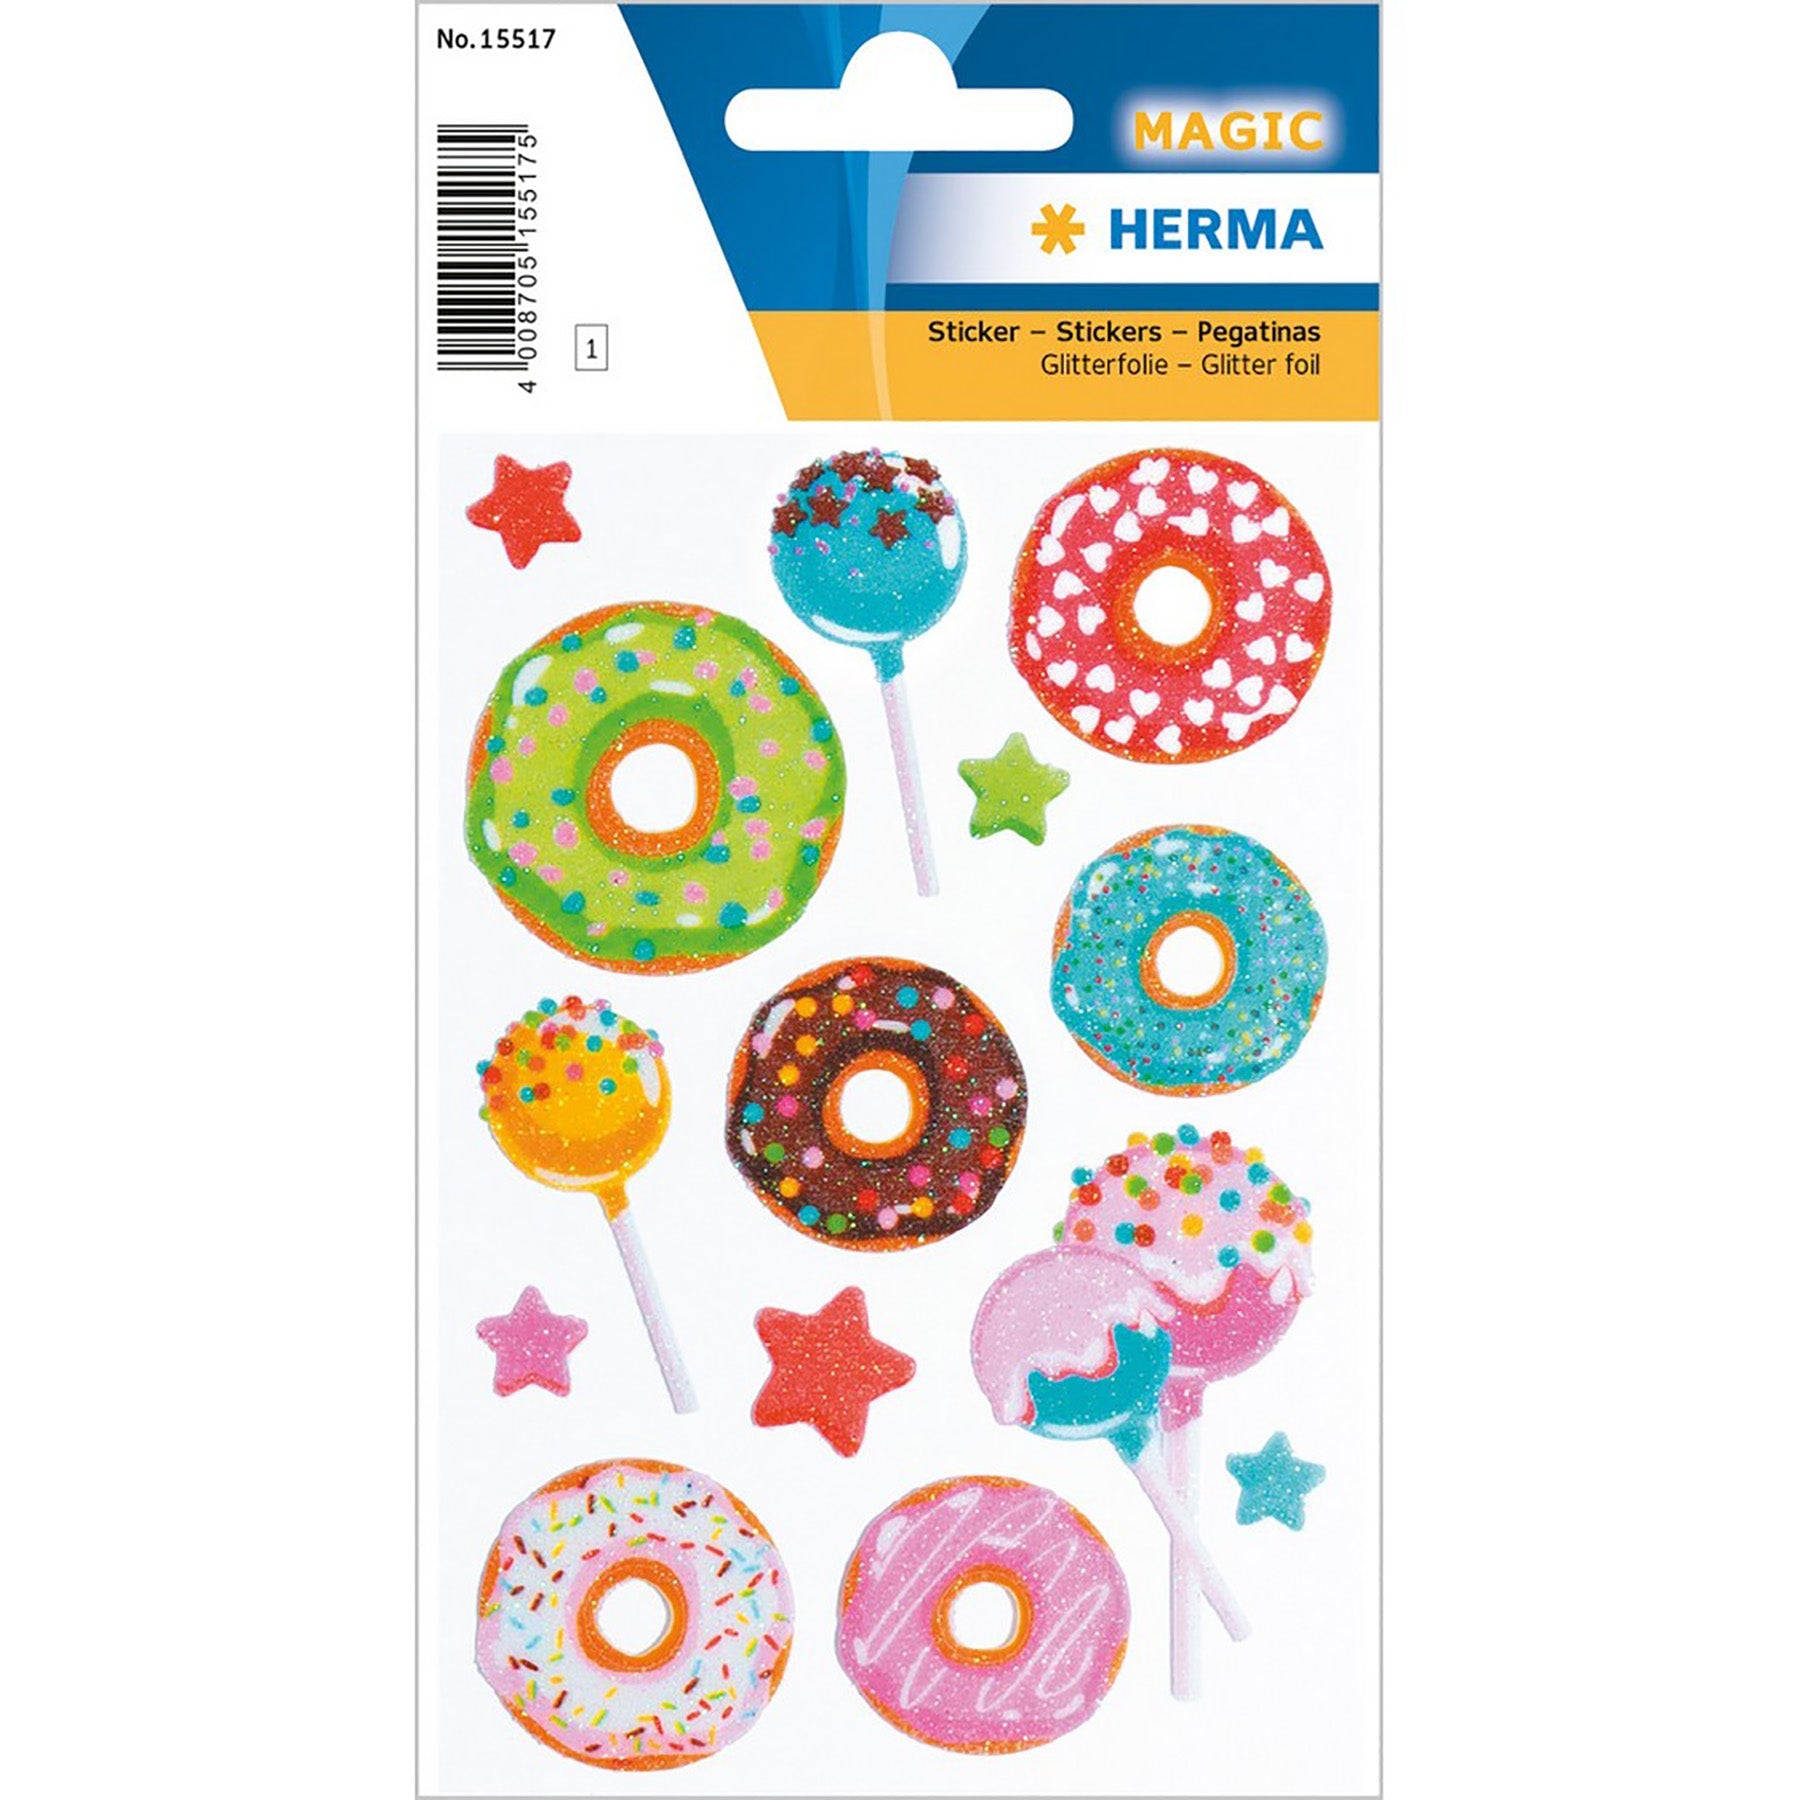 Herma Magic Stickers Sweeties  Glitter Foil 4.75x3.1in Sheet